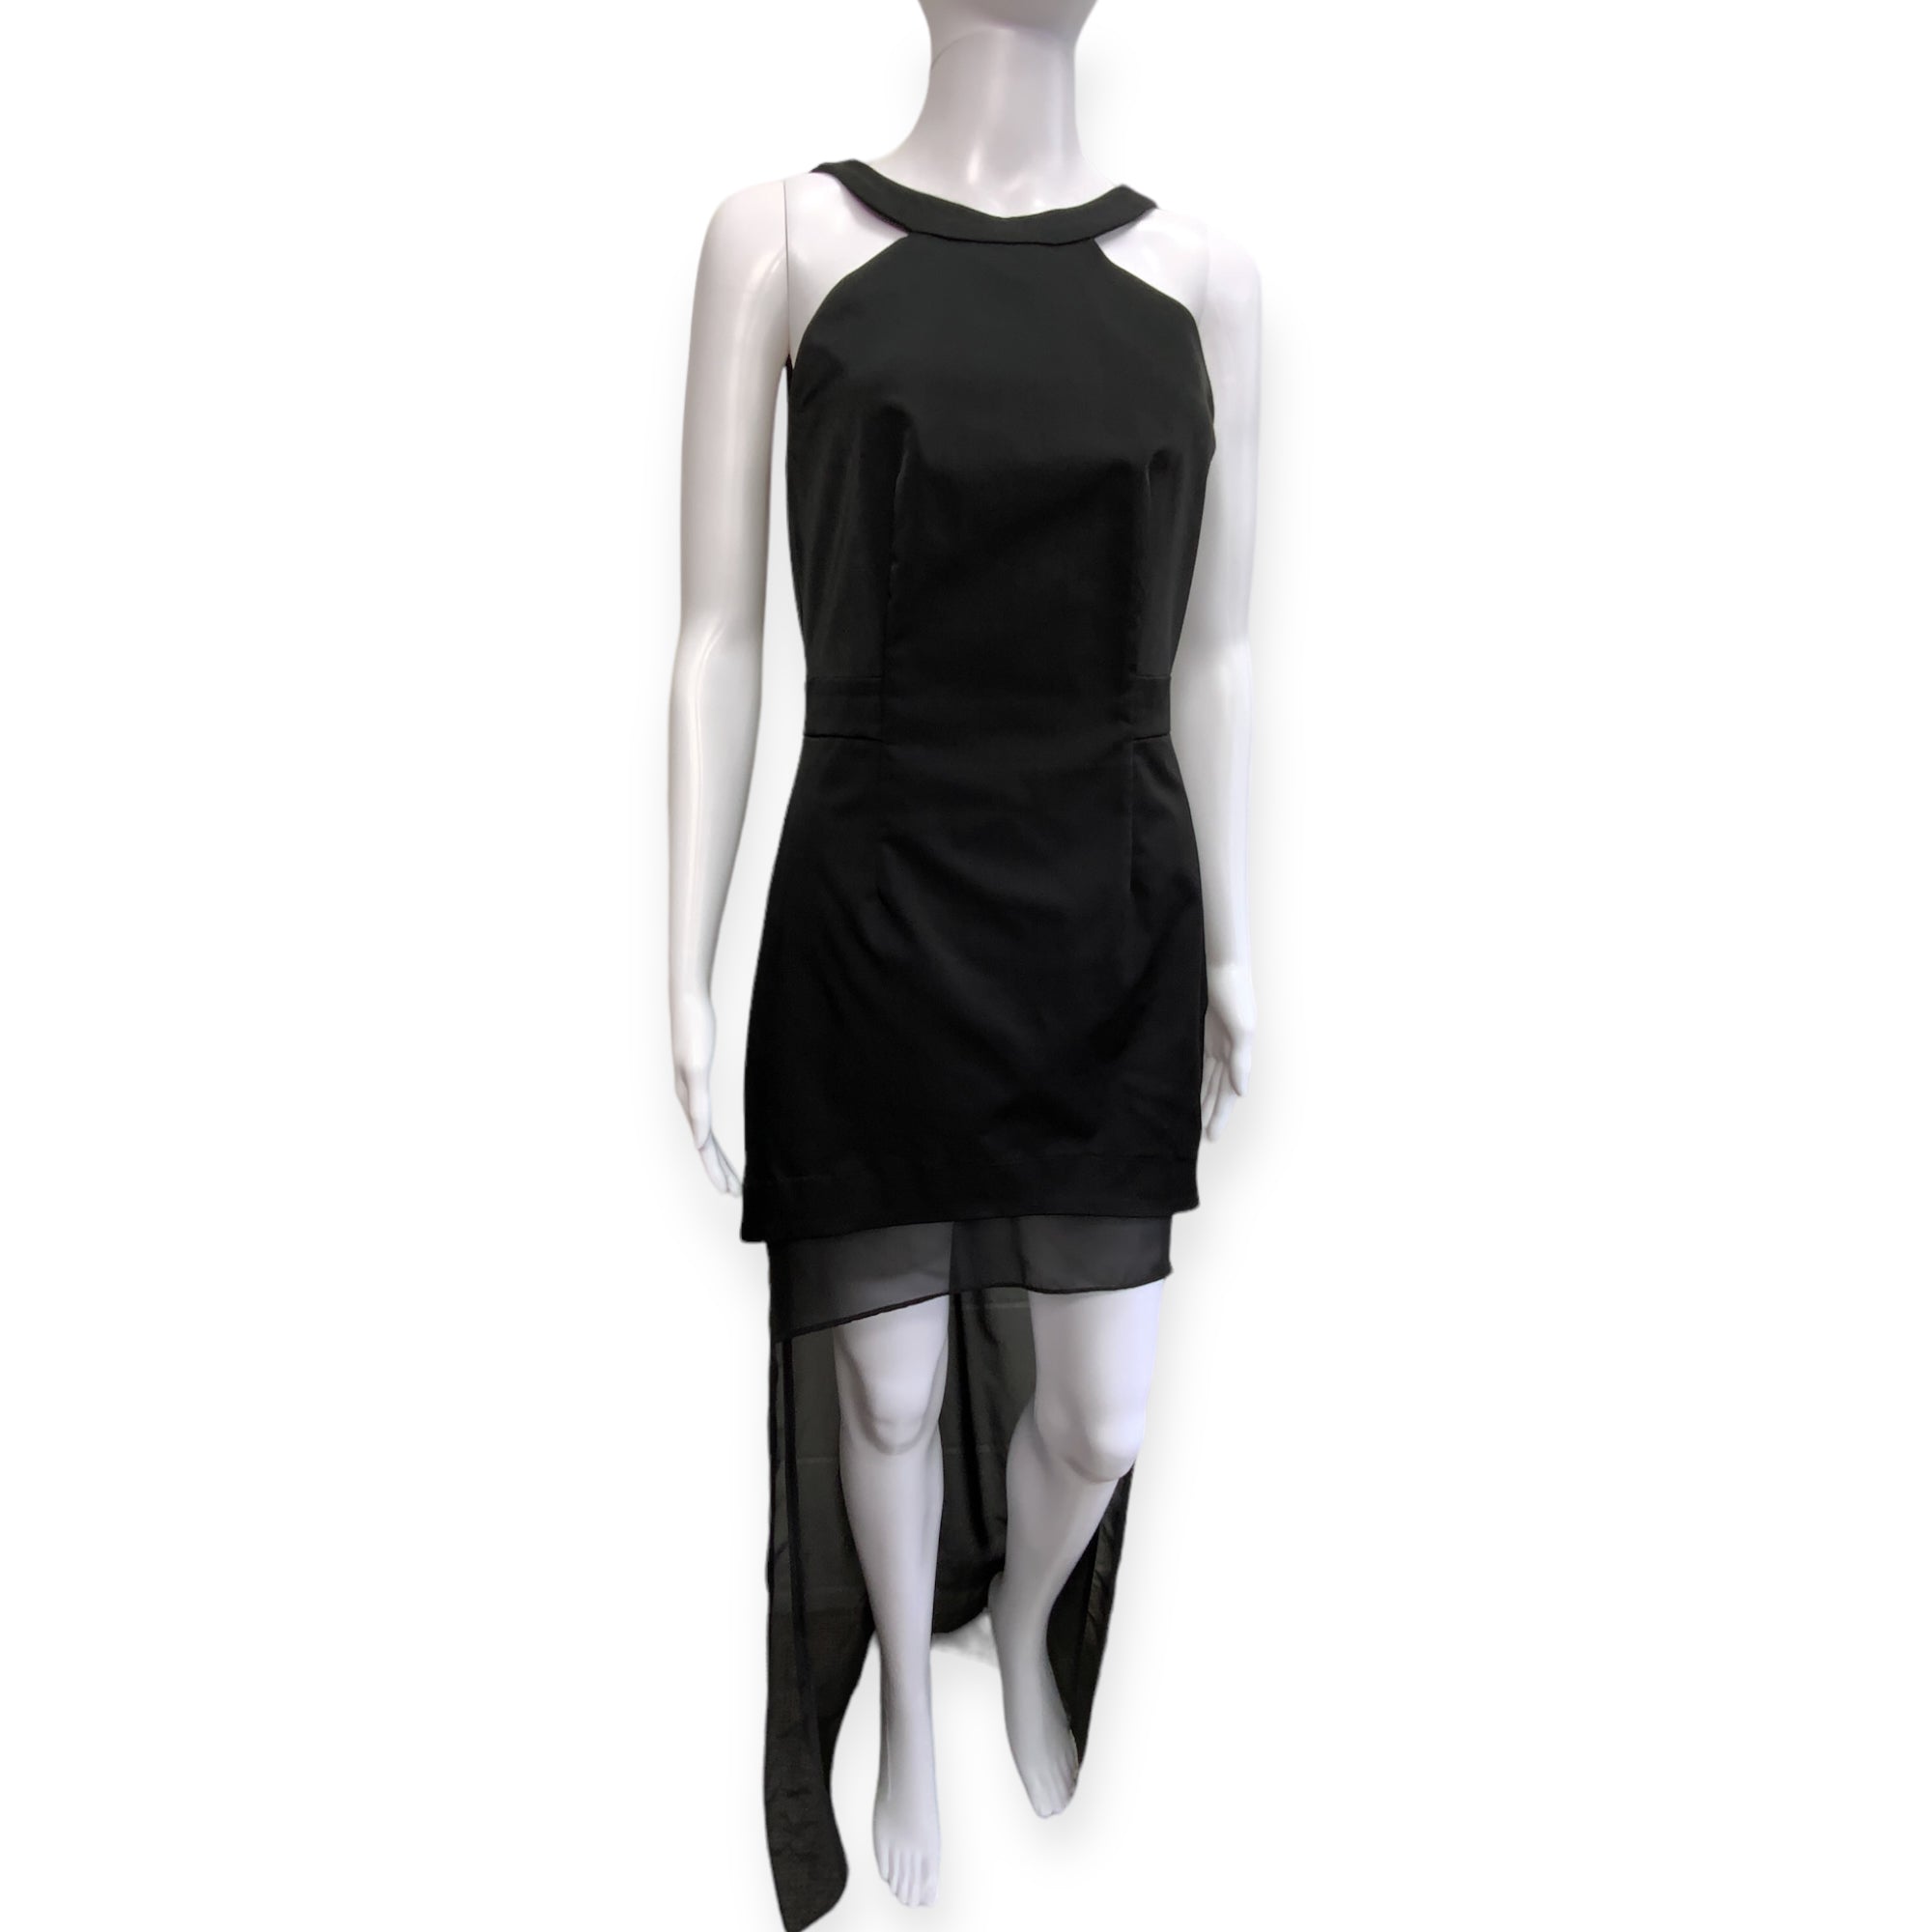 PILGRIM Black Halter Neck Formal/Cocktail/Party Dress with Chiffon Trail - Size 10